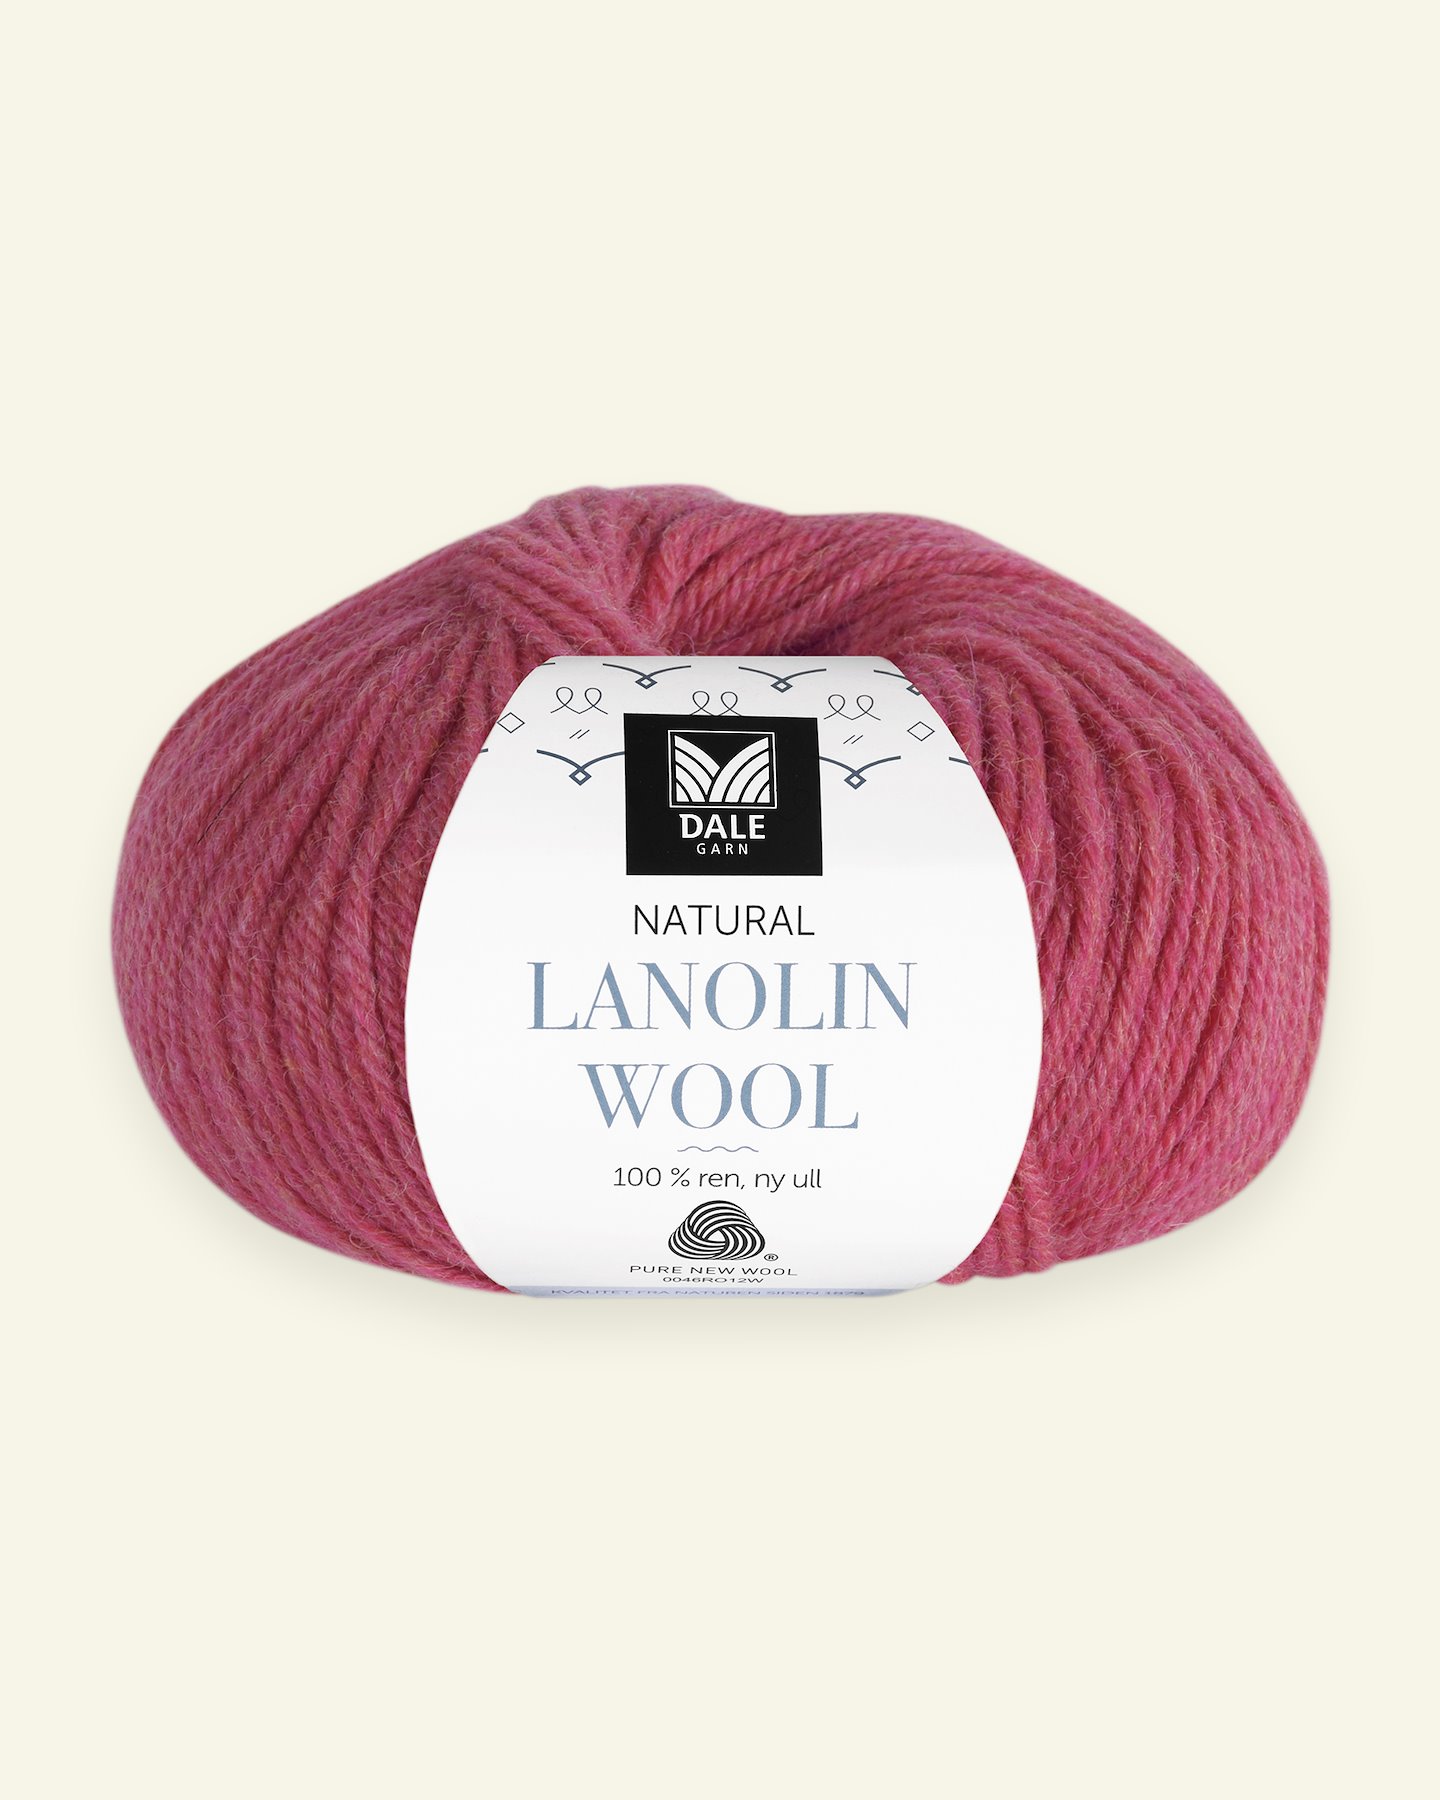 Dale Garn, 100% Biowolle "Lanolin Wool", himbeere rot (1447) 90000296_pack